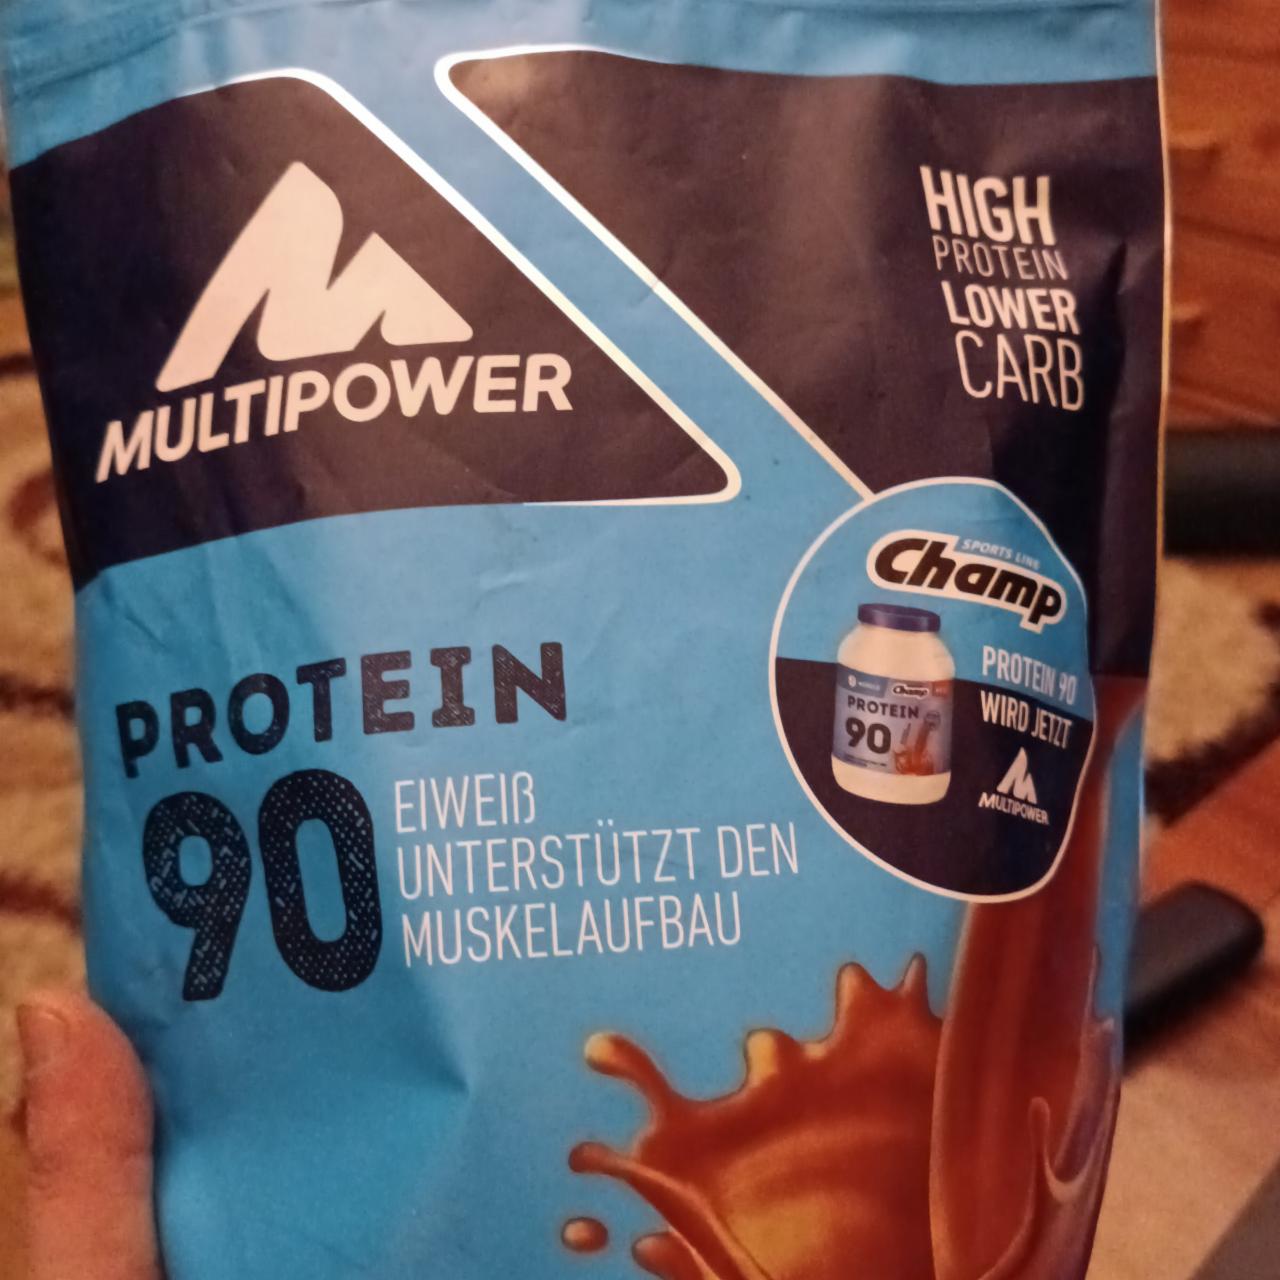 Фото - Протеин с шоколадным вкусом Protein 90 Schoko Multipower